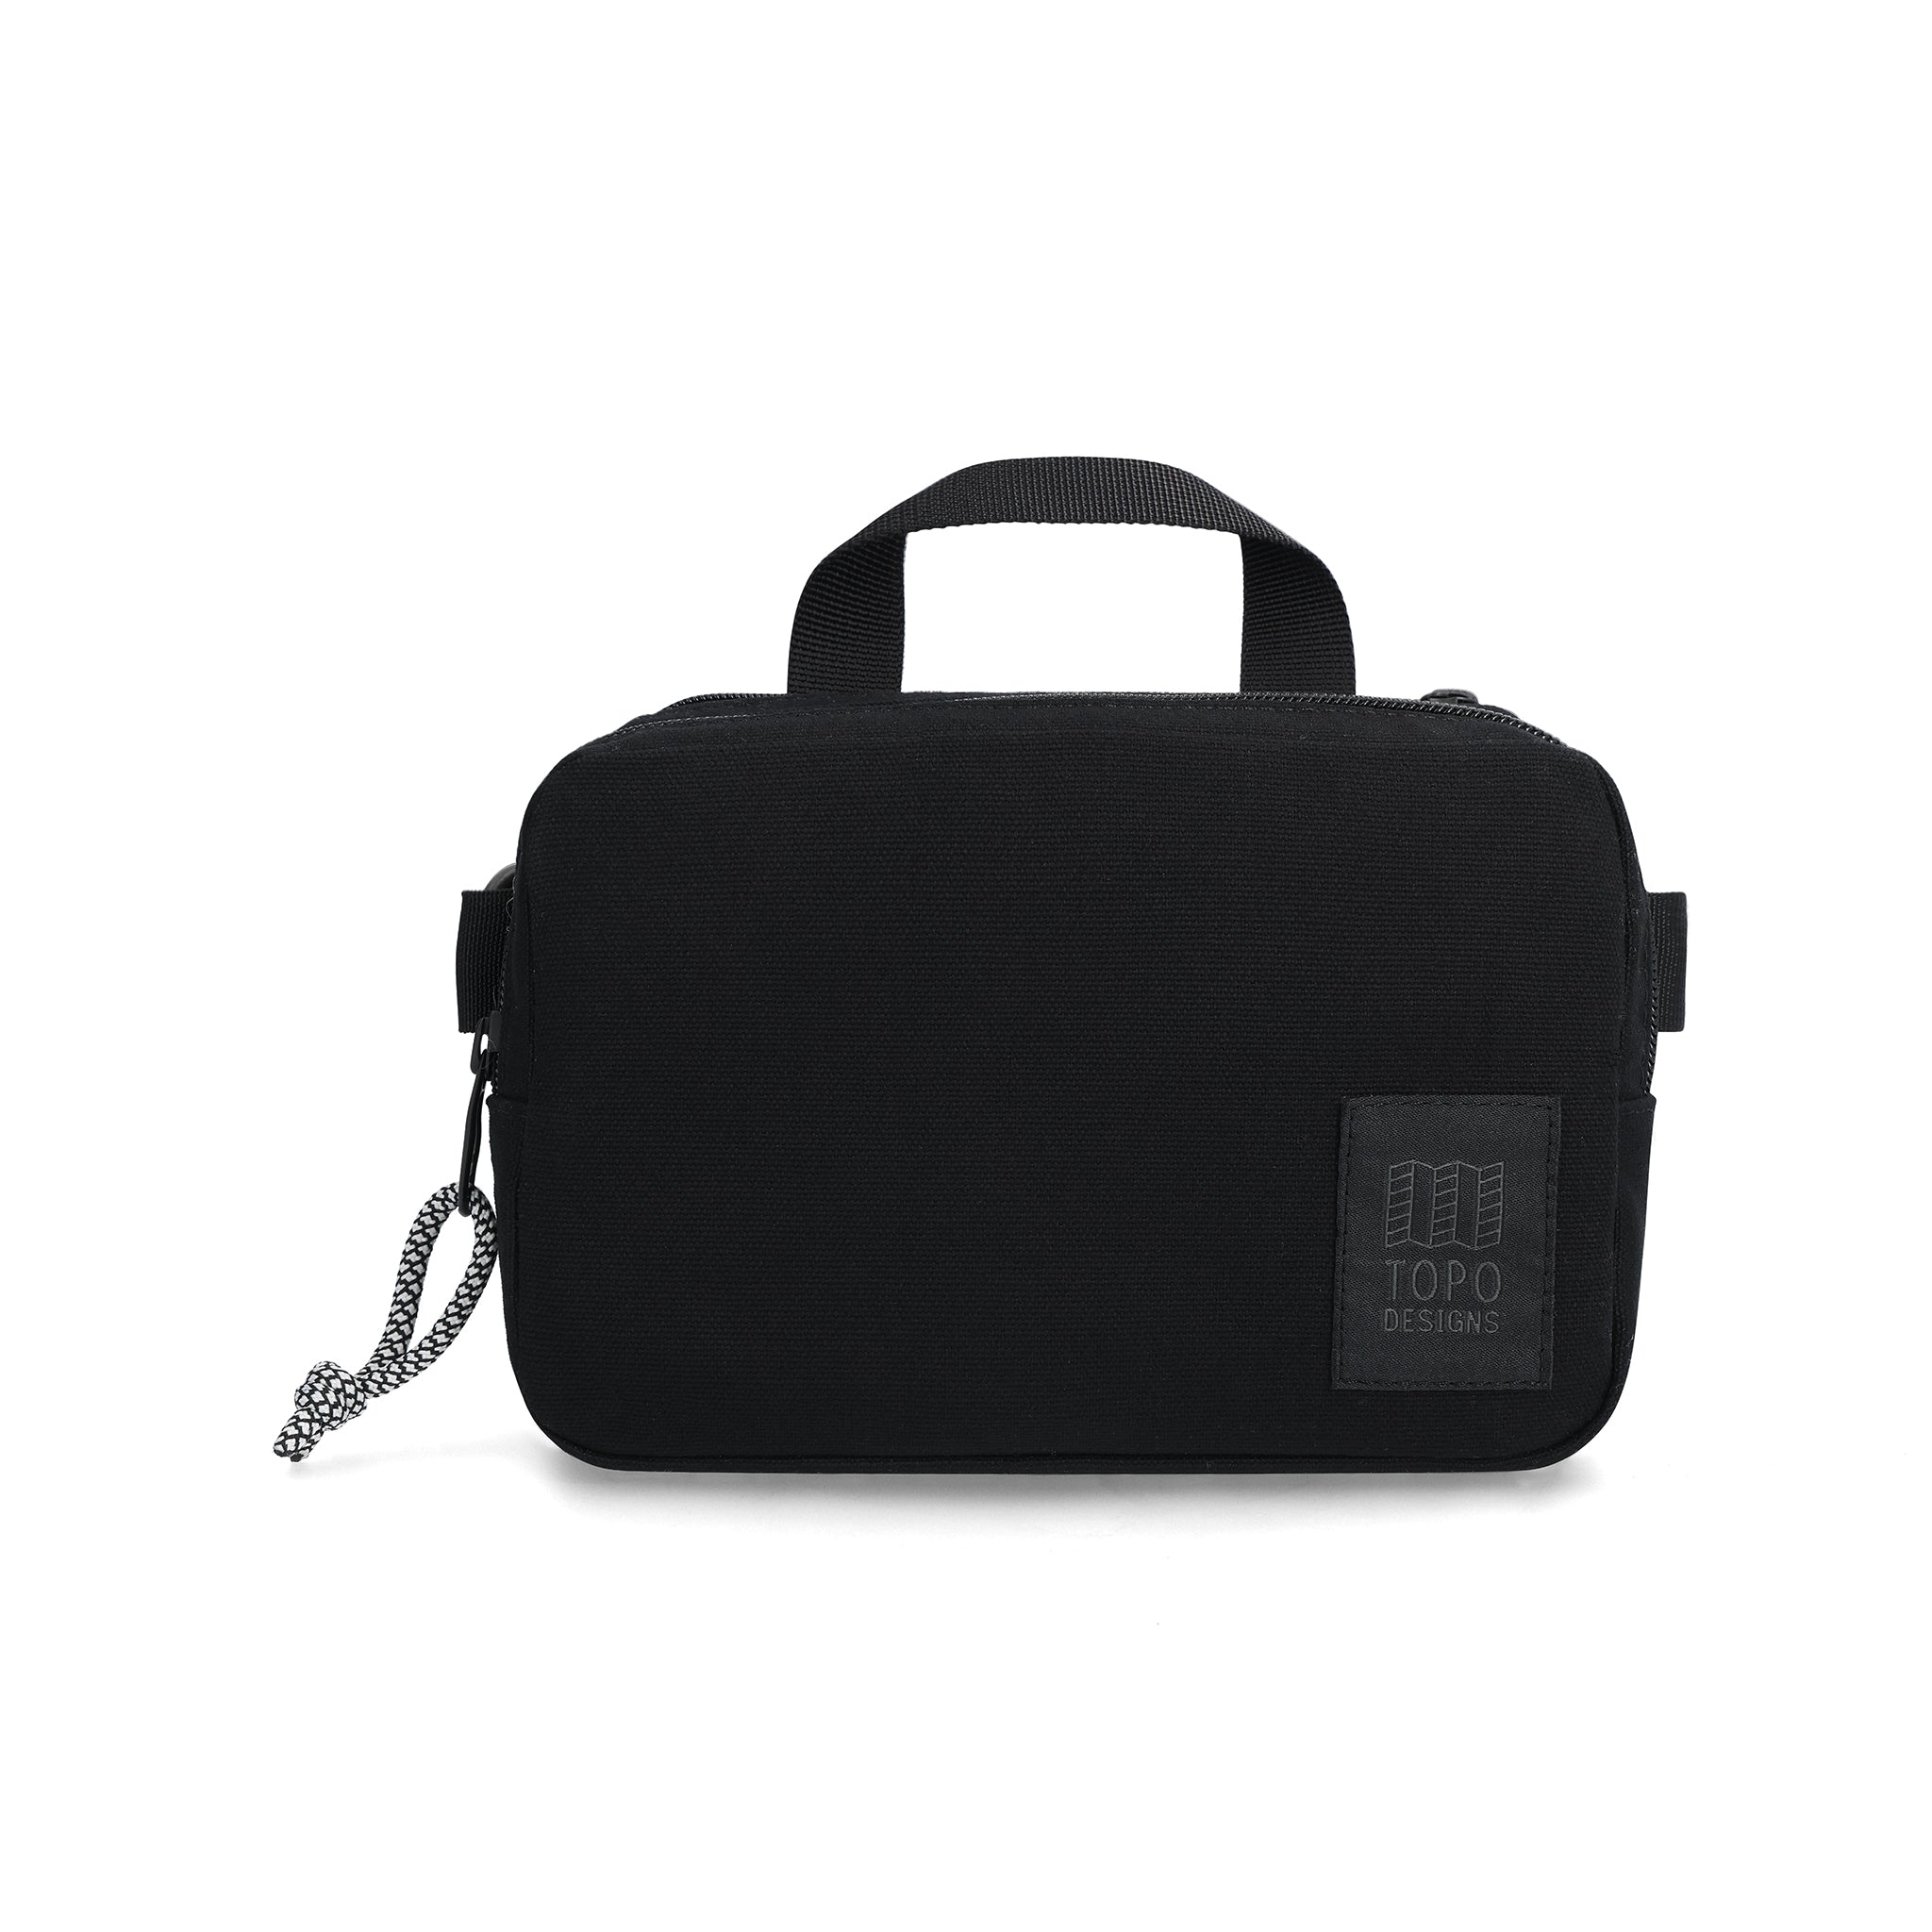 Front View of Topo Designs Dirt Belt Bag in "Black"